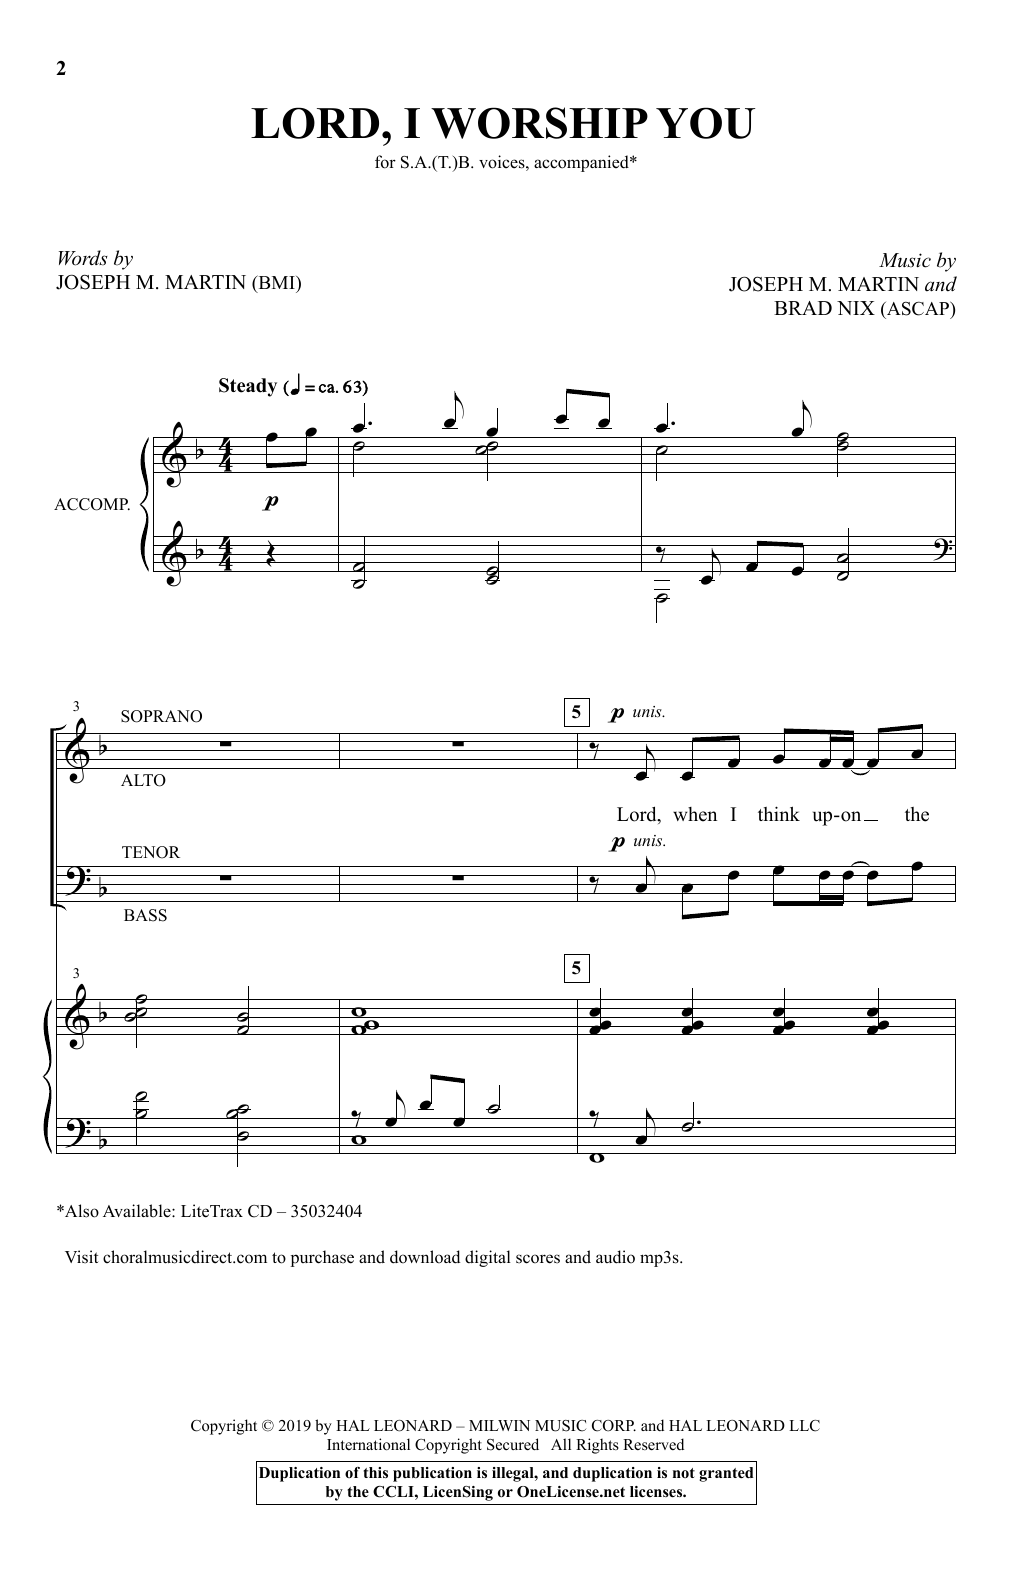 Joseph M. Martin & Brad Nix Lord, I Worship You Sheet Music Notes & Chords for SATB Choir - Download or Print PDF